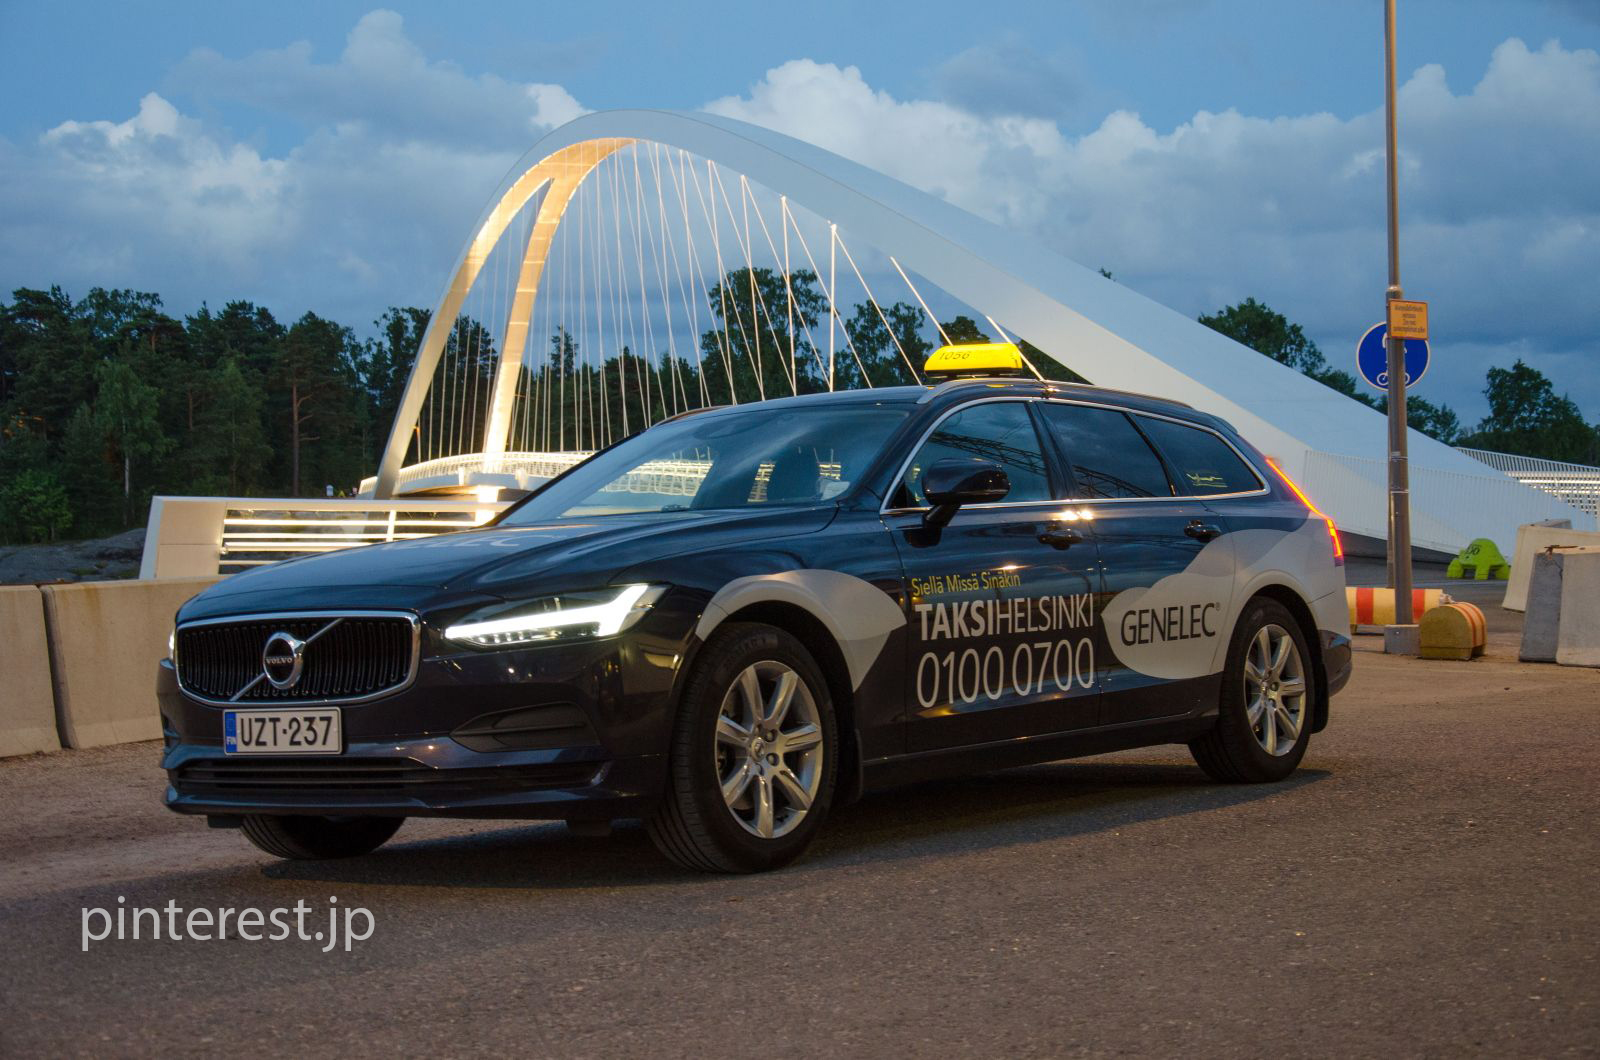 Трансфер в финляндии | заказать такси онлайн | кивитакси